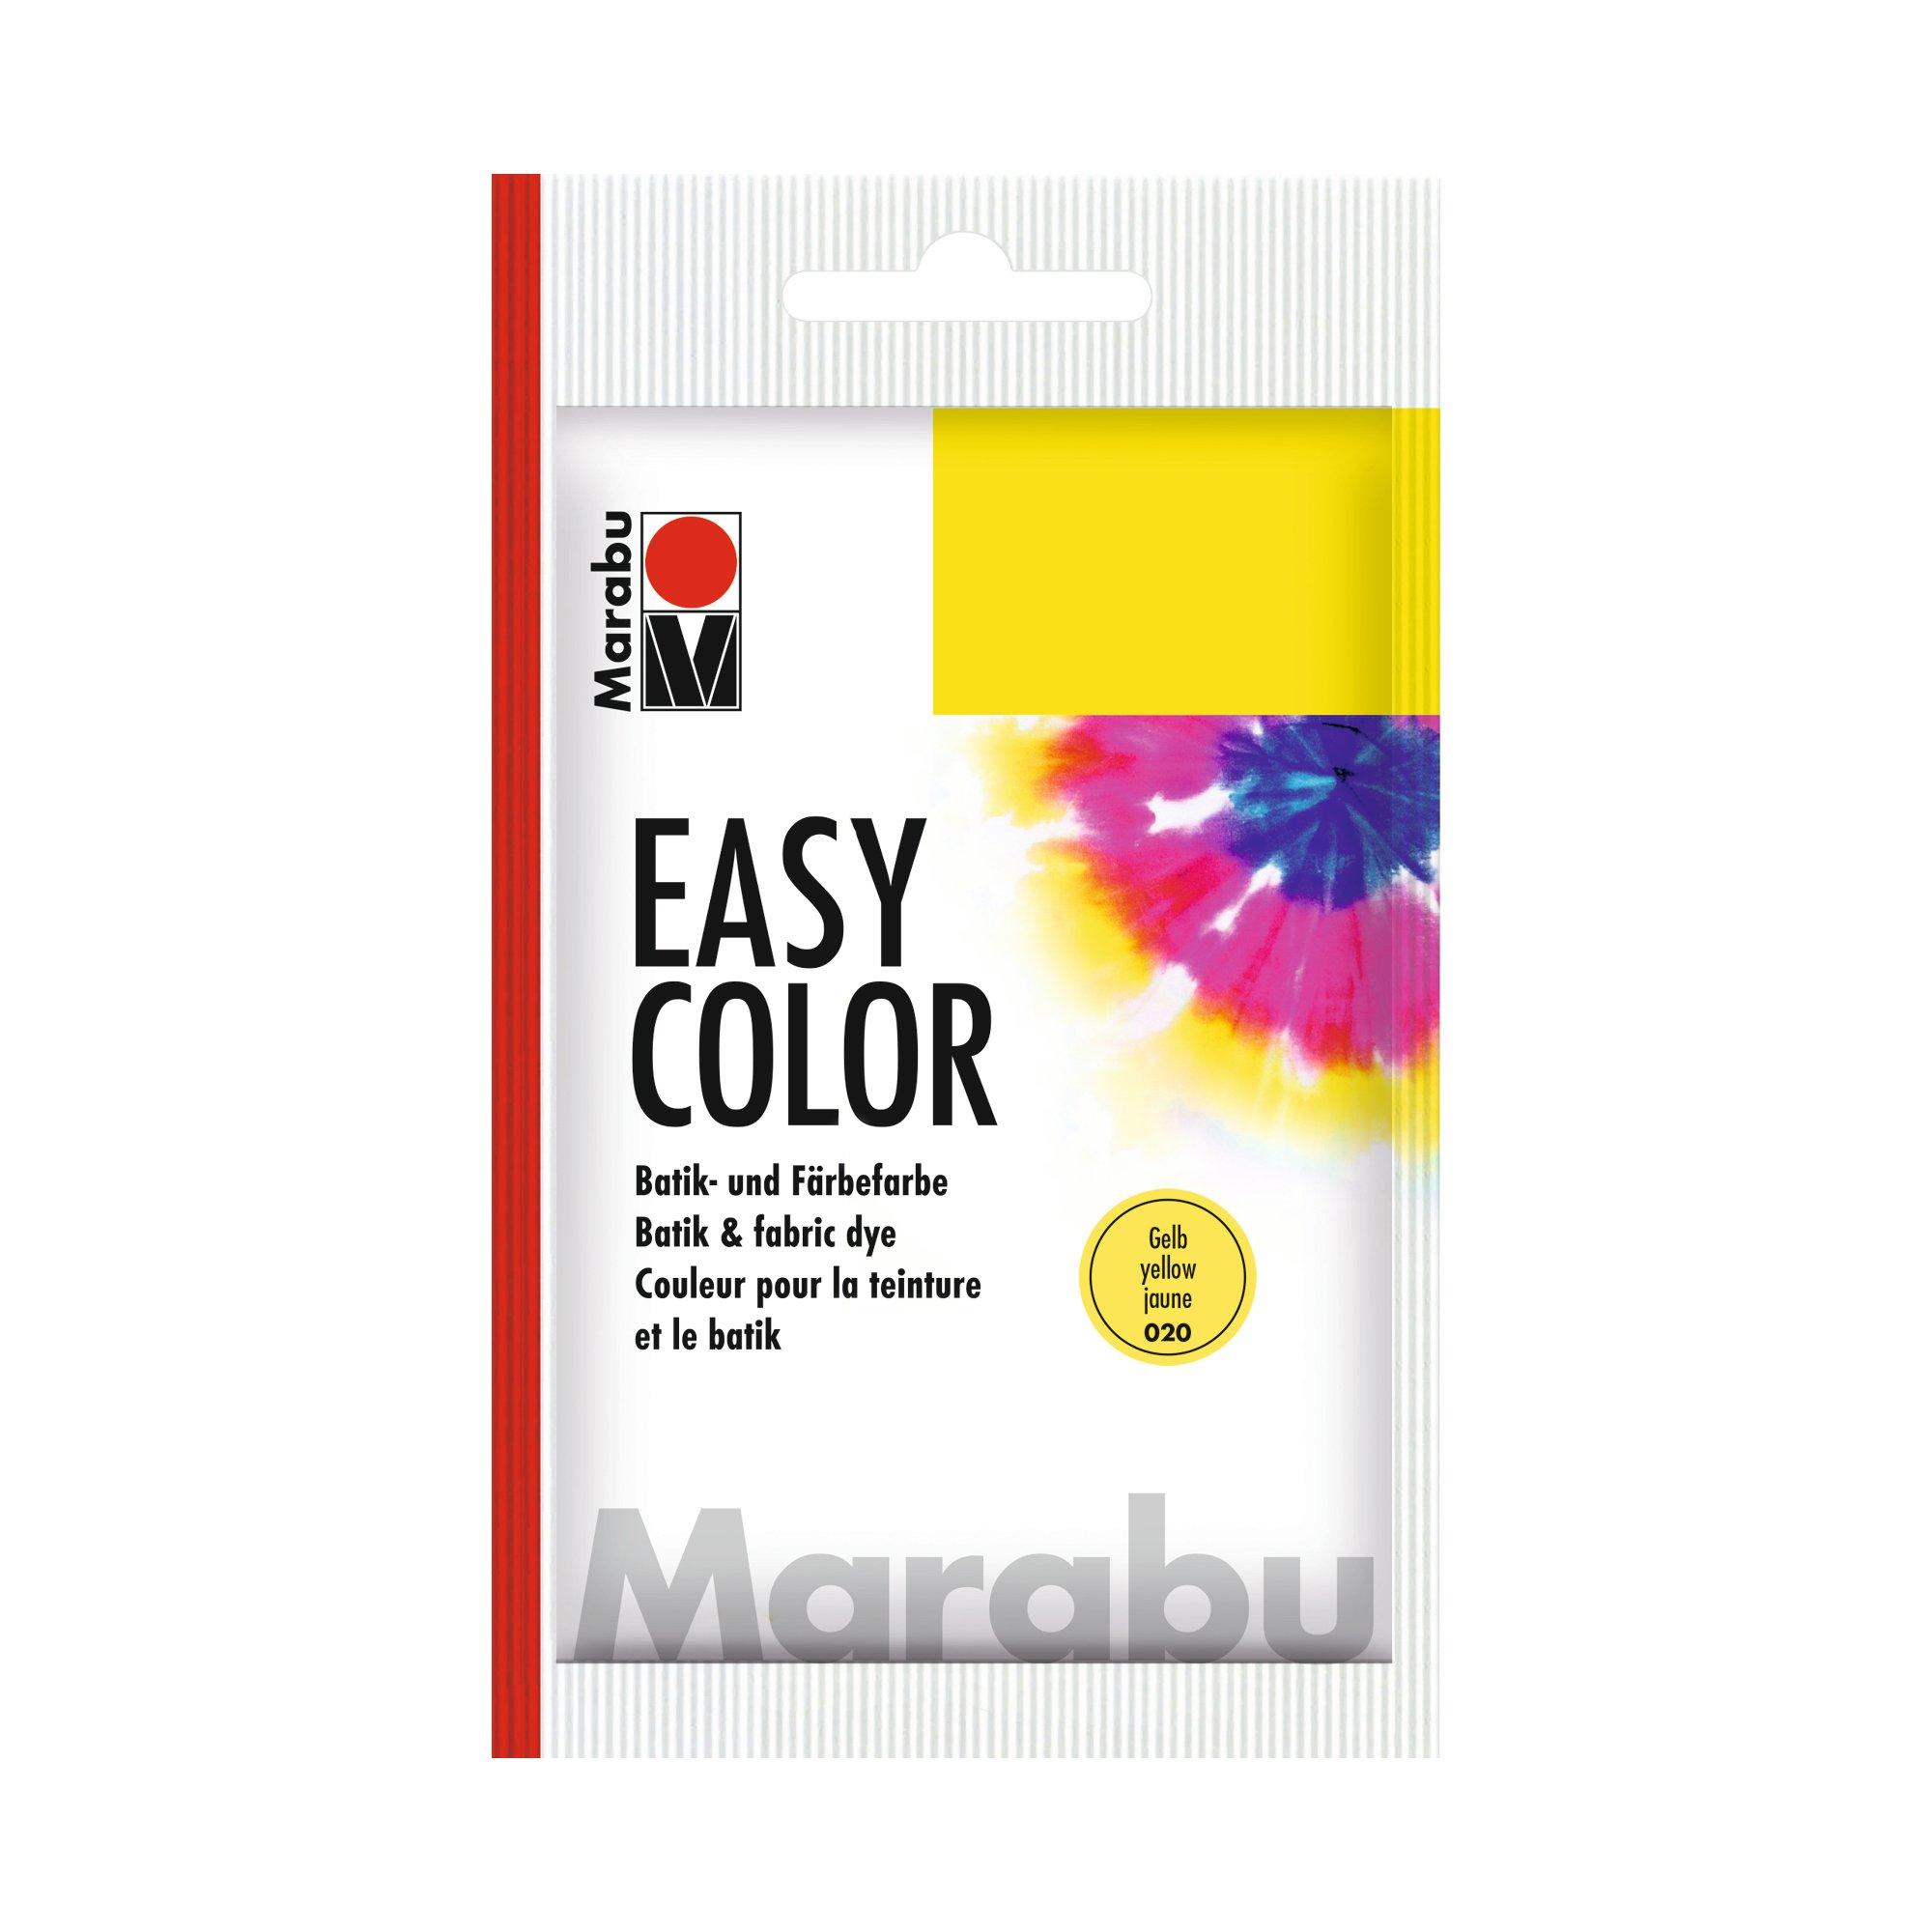 Image of Marabu Batikfarbe, Easy Color Gelb 020 - ONE SIZE